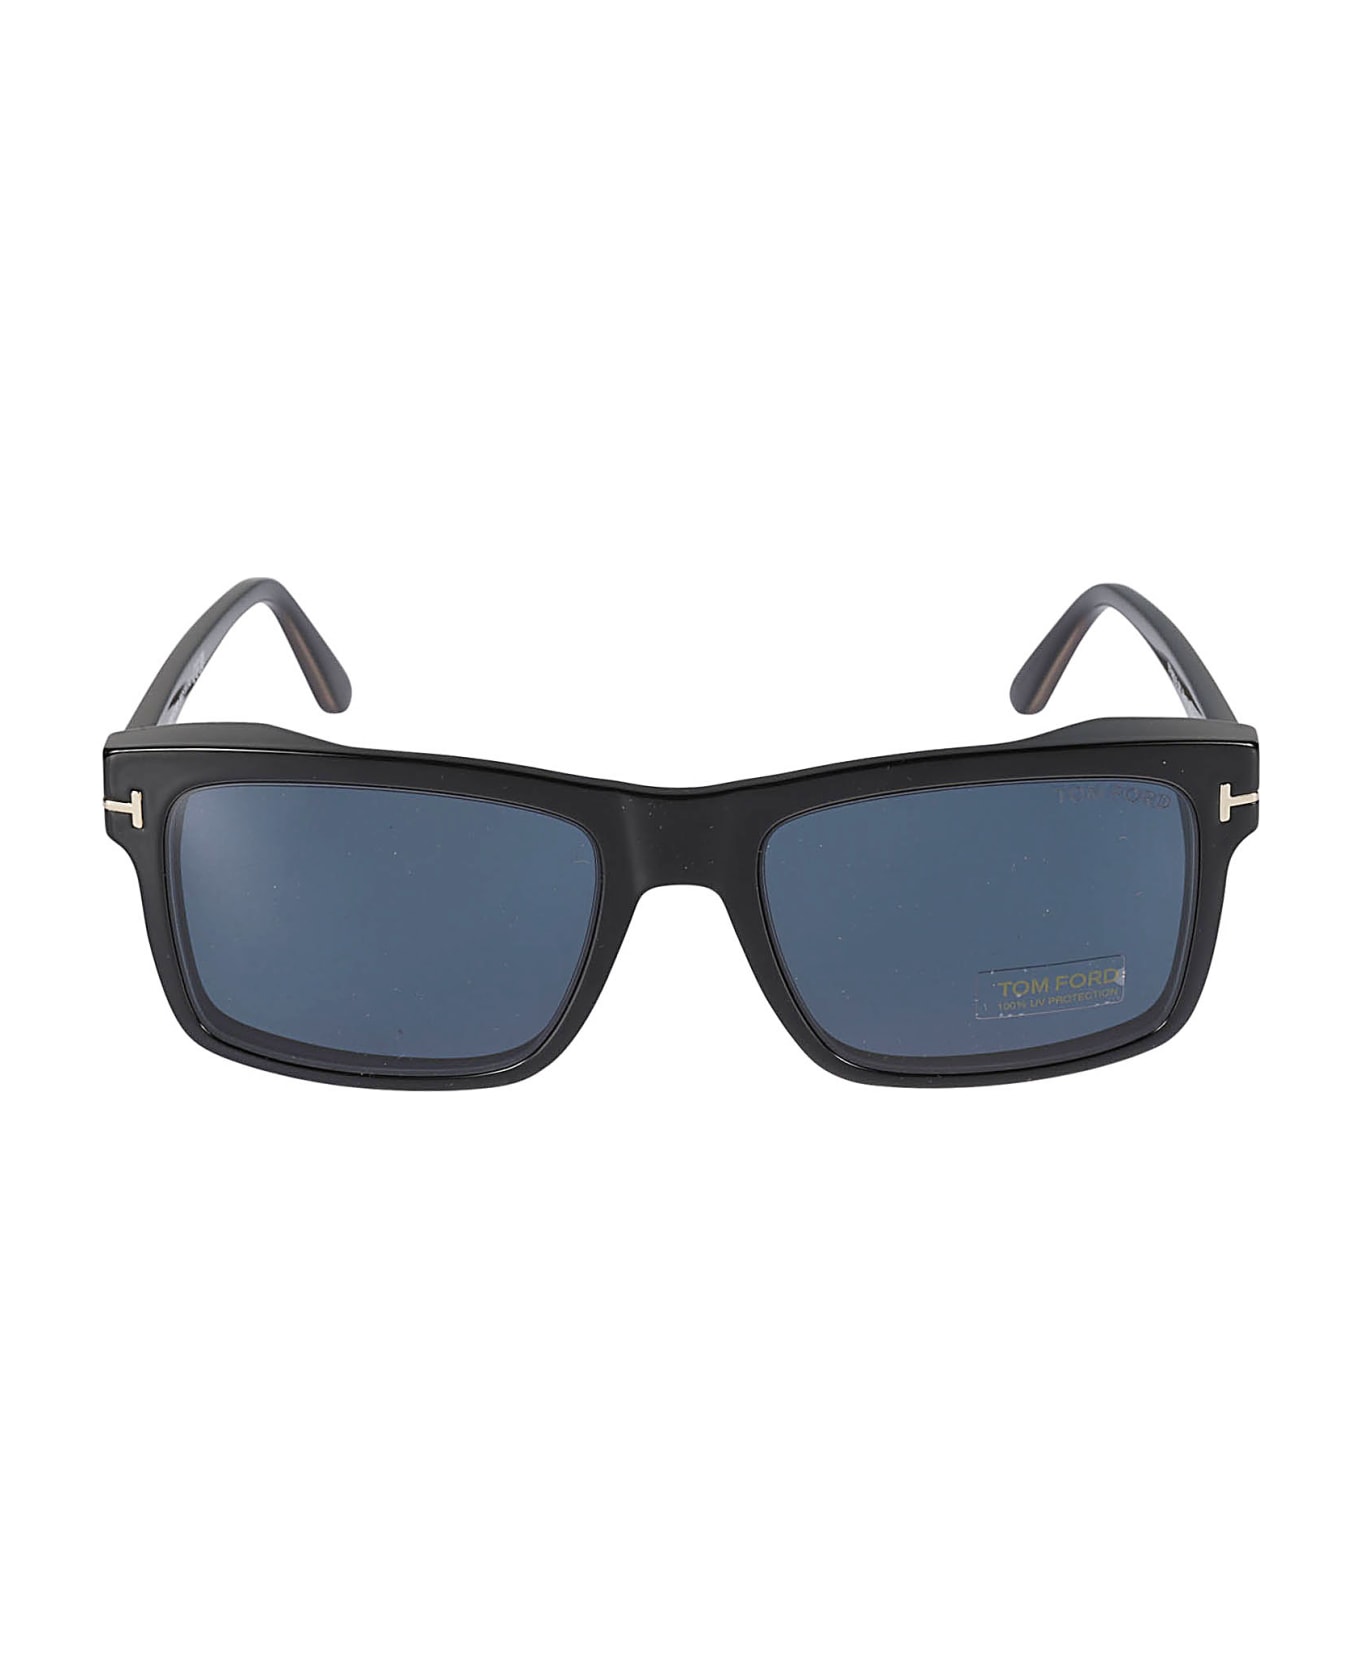 Tom Ford Eyewear T-plaque Glasses - 001